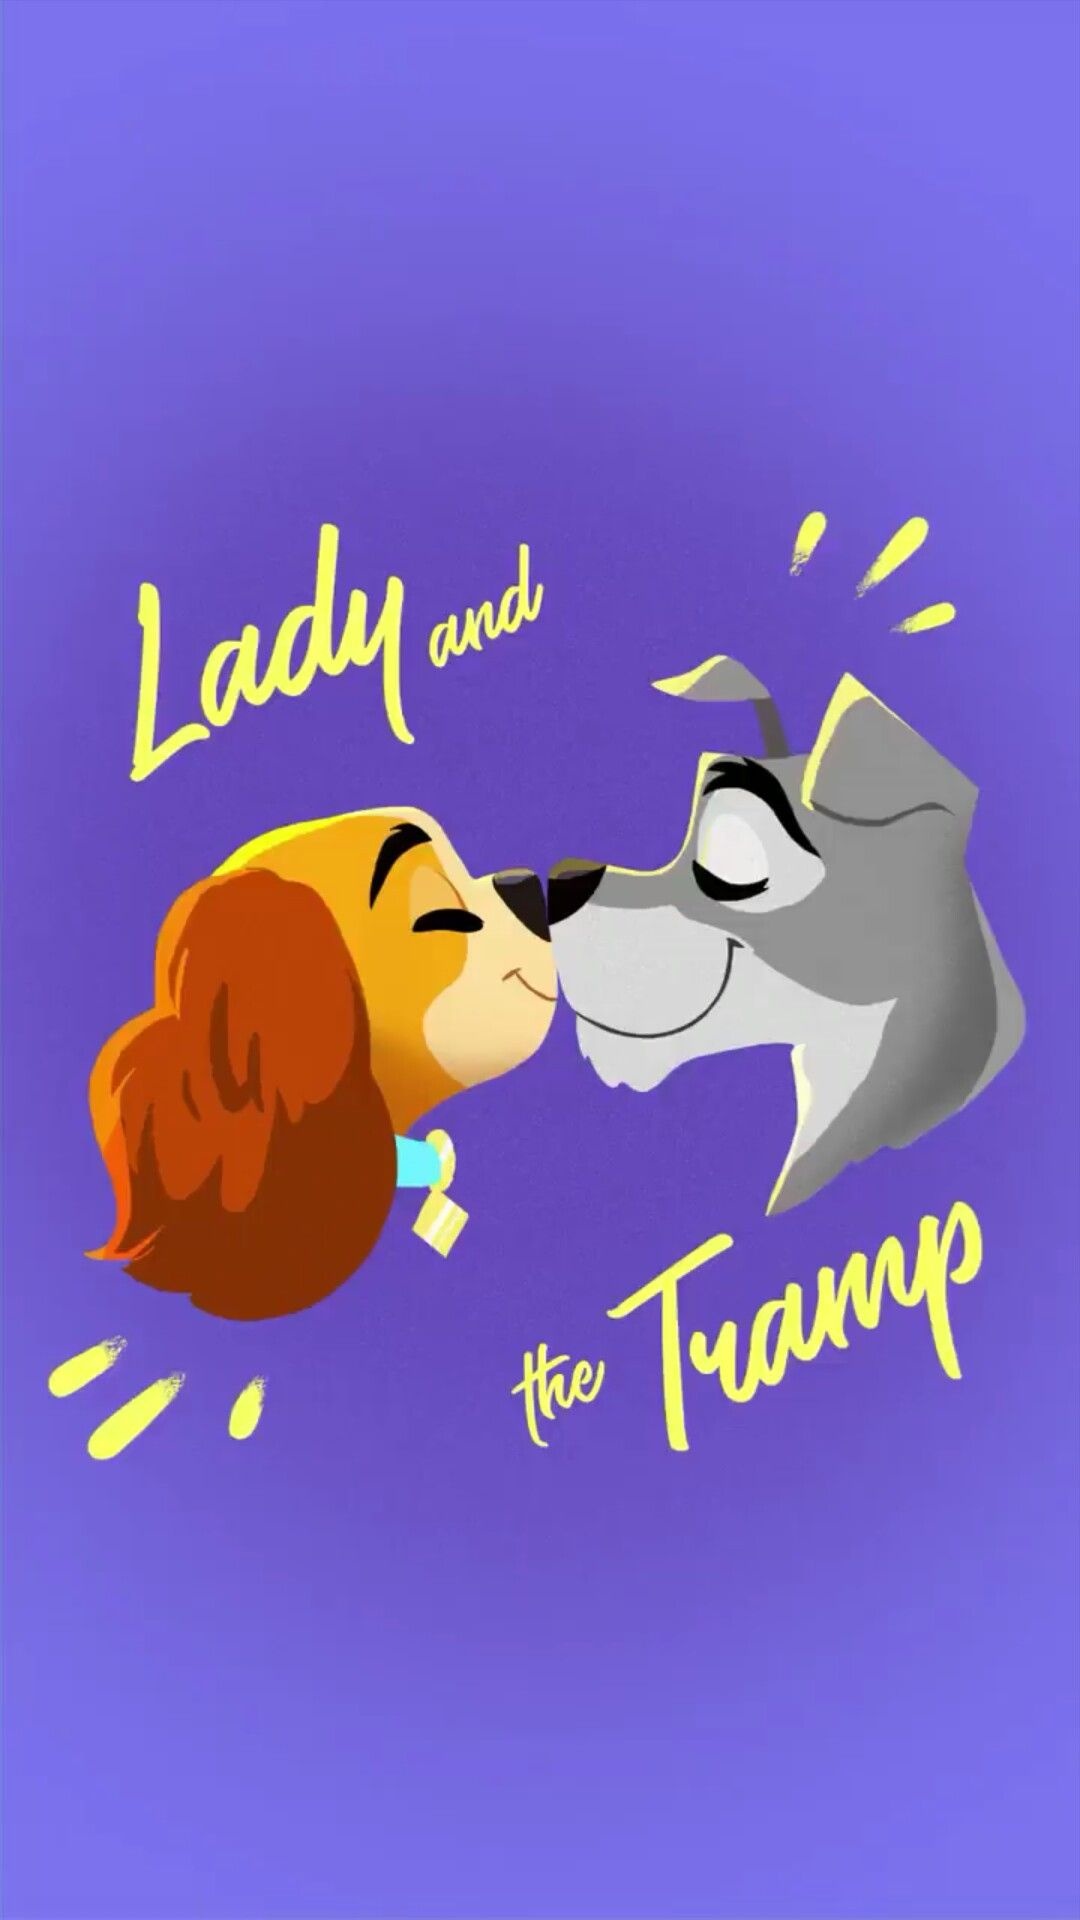 Lady and the Tramp, Disney wallpaper, Fun Disney theme, Beloved animated film, 1080x1920 Full HD Phone